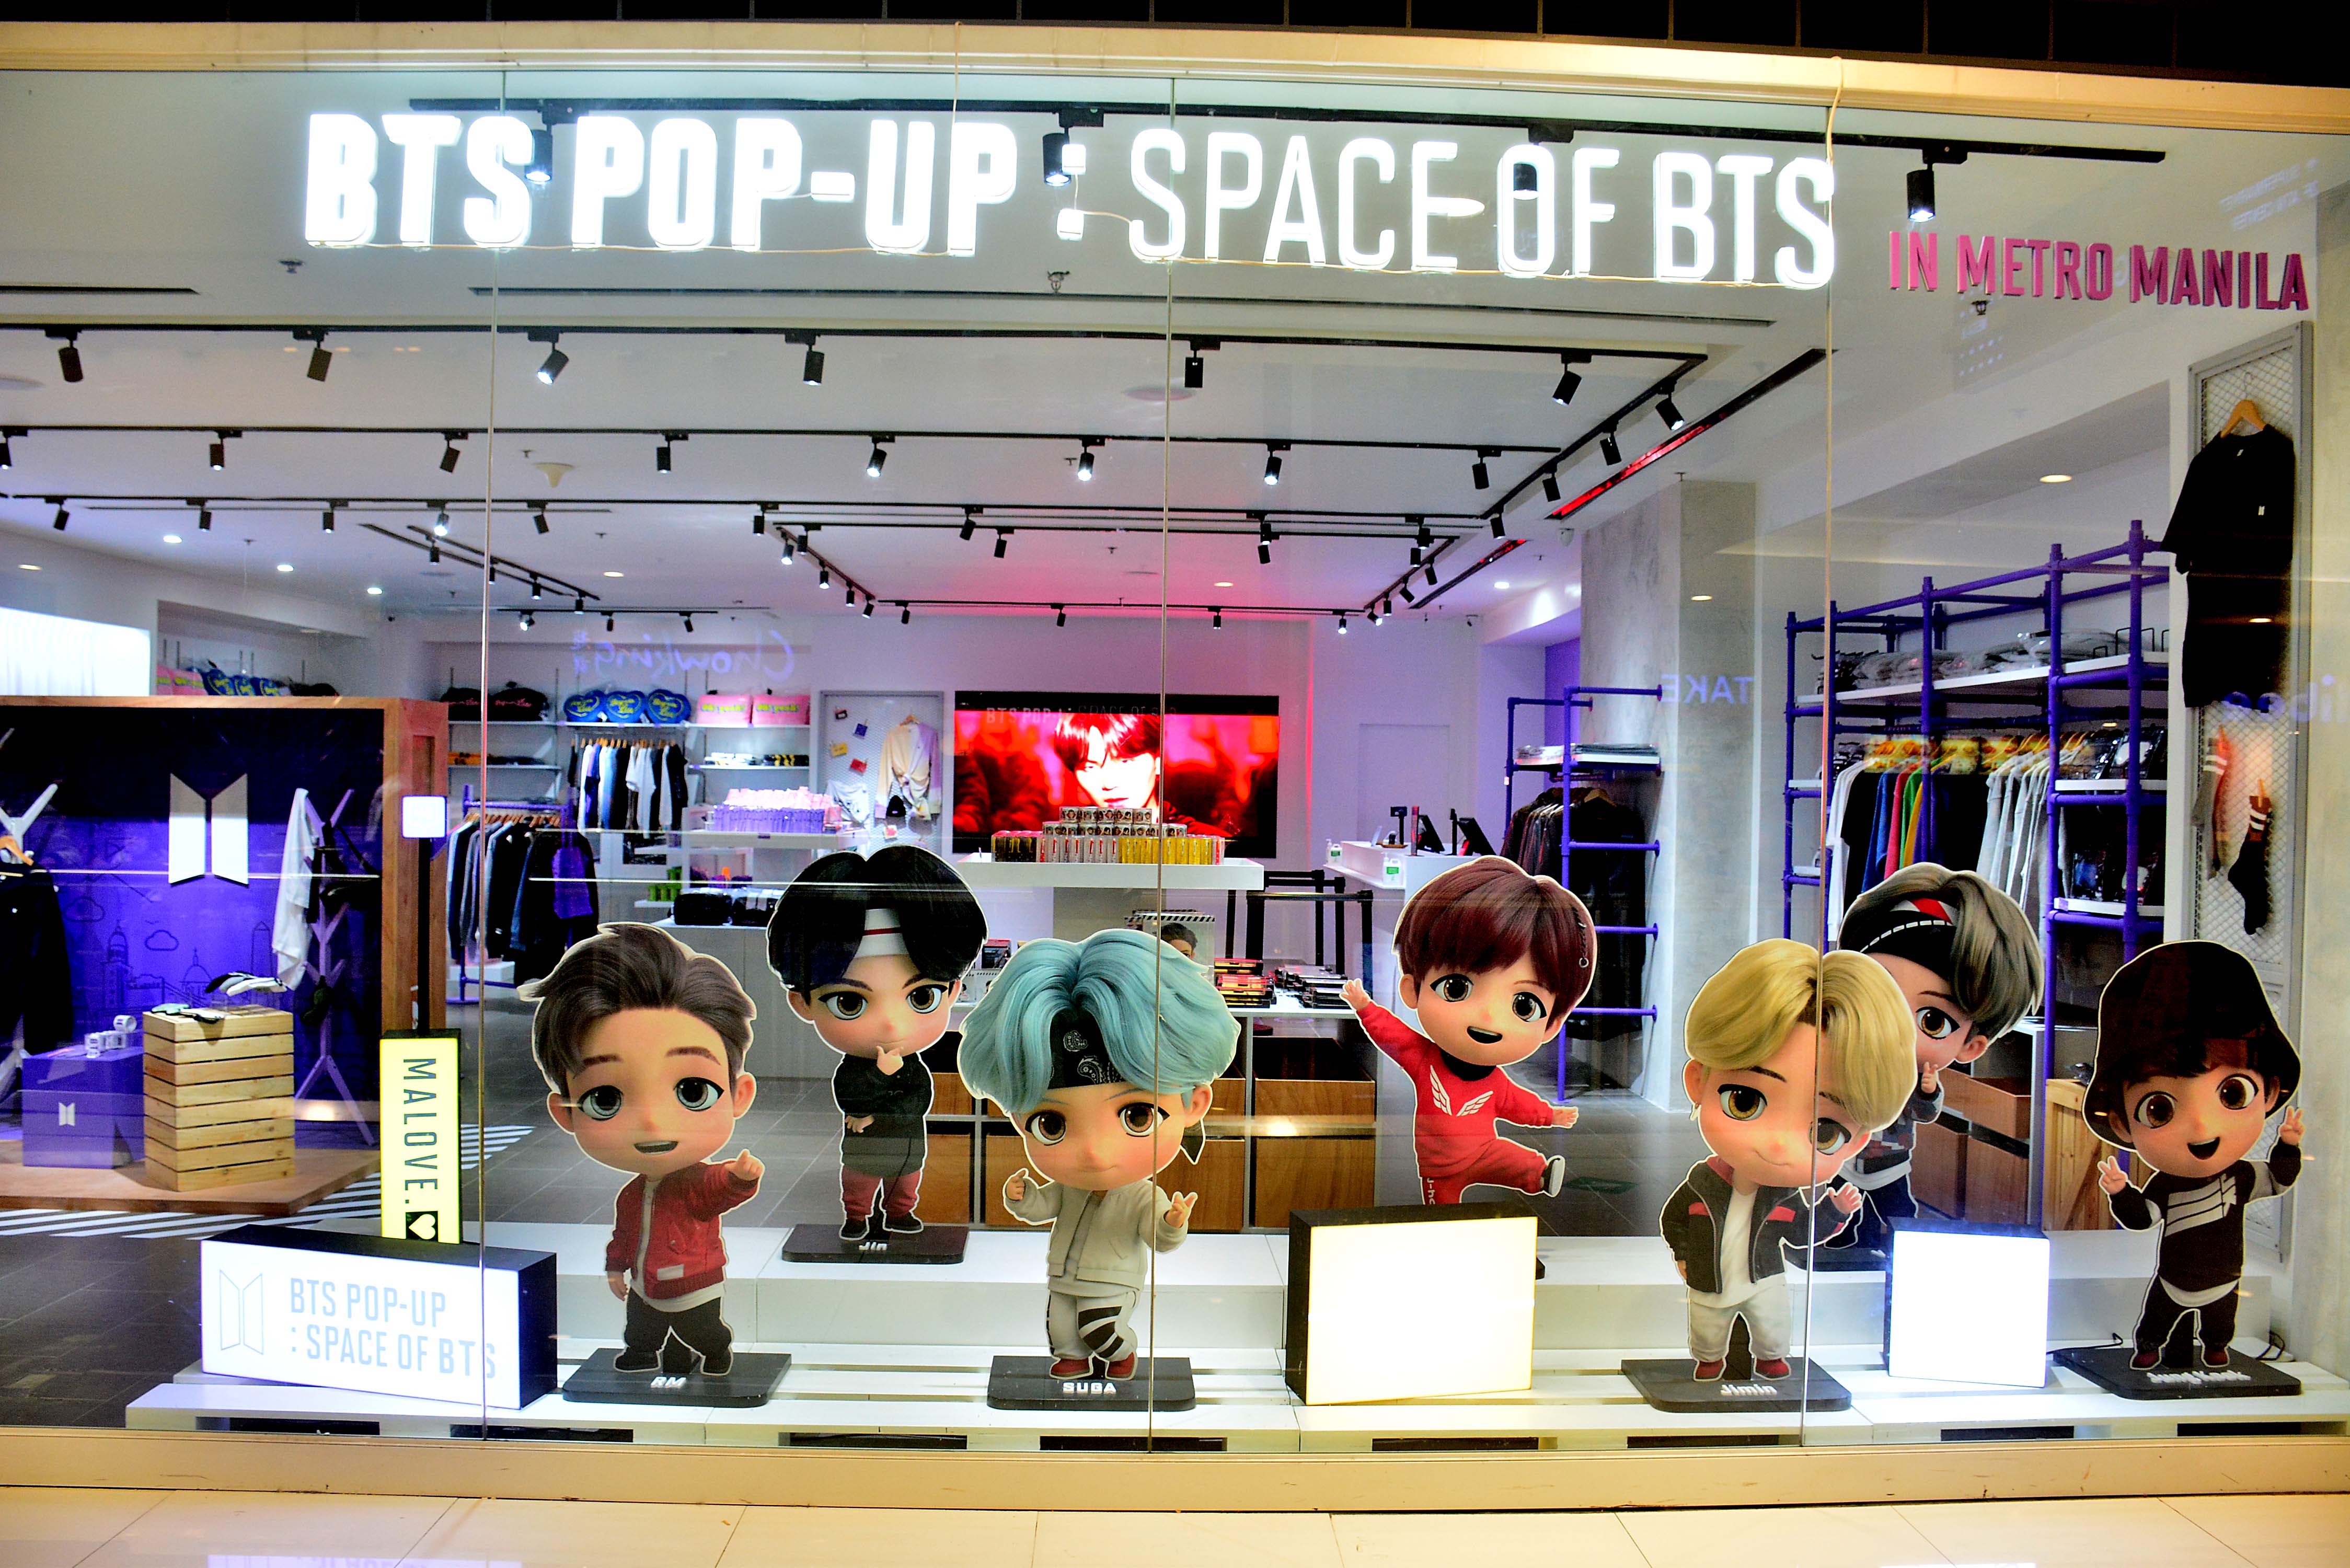 New BTS merchandise awaits at the pop-up